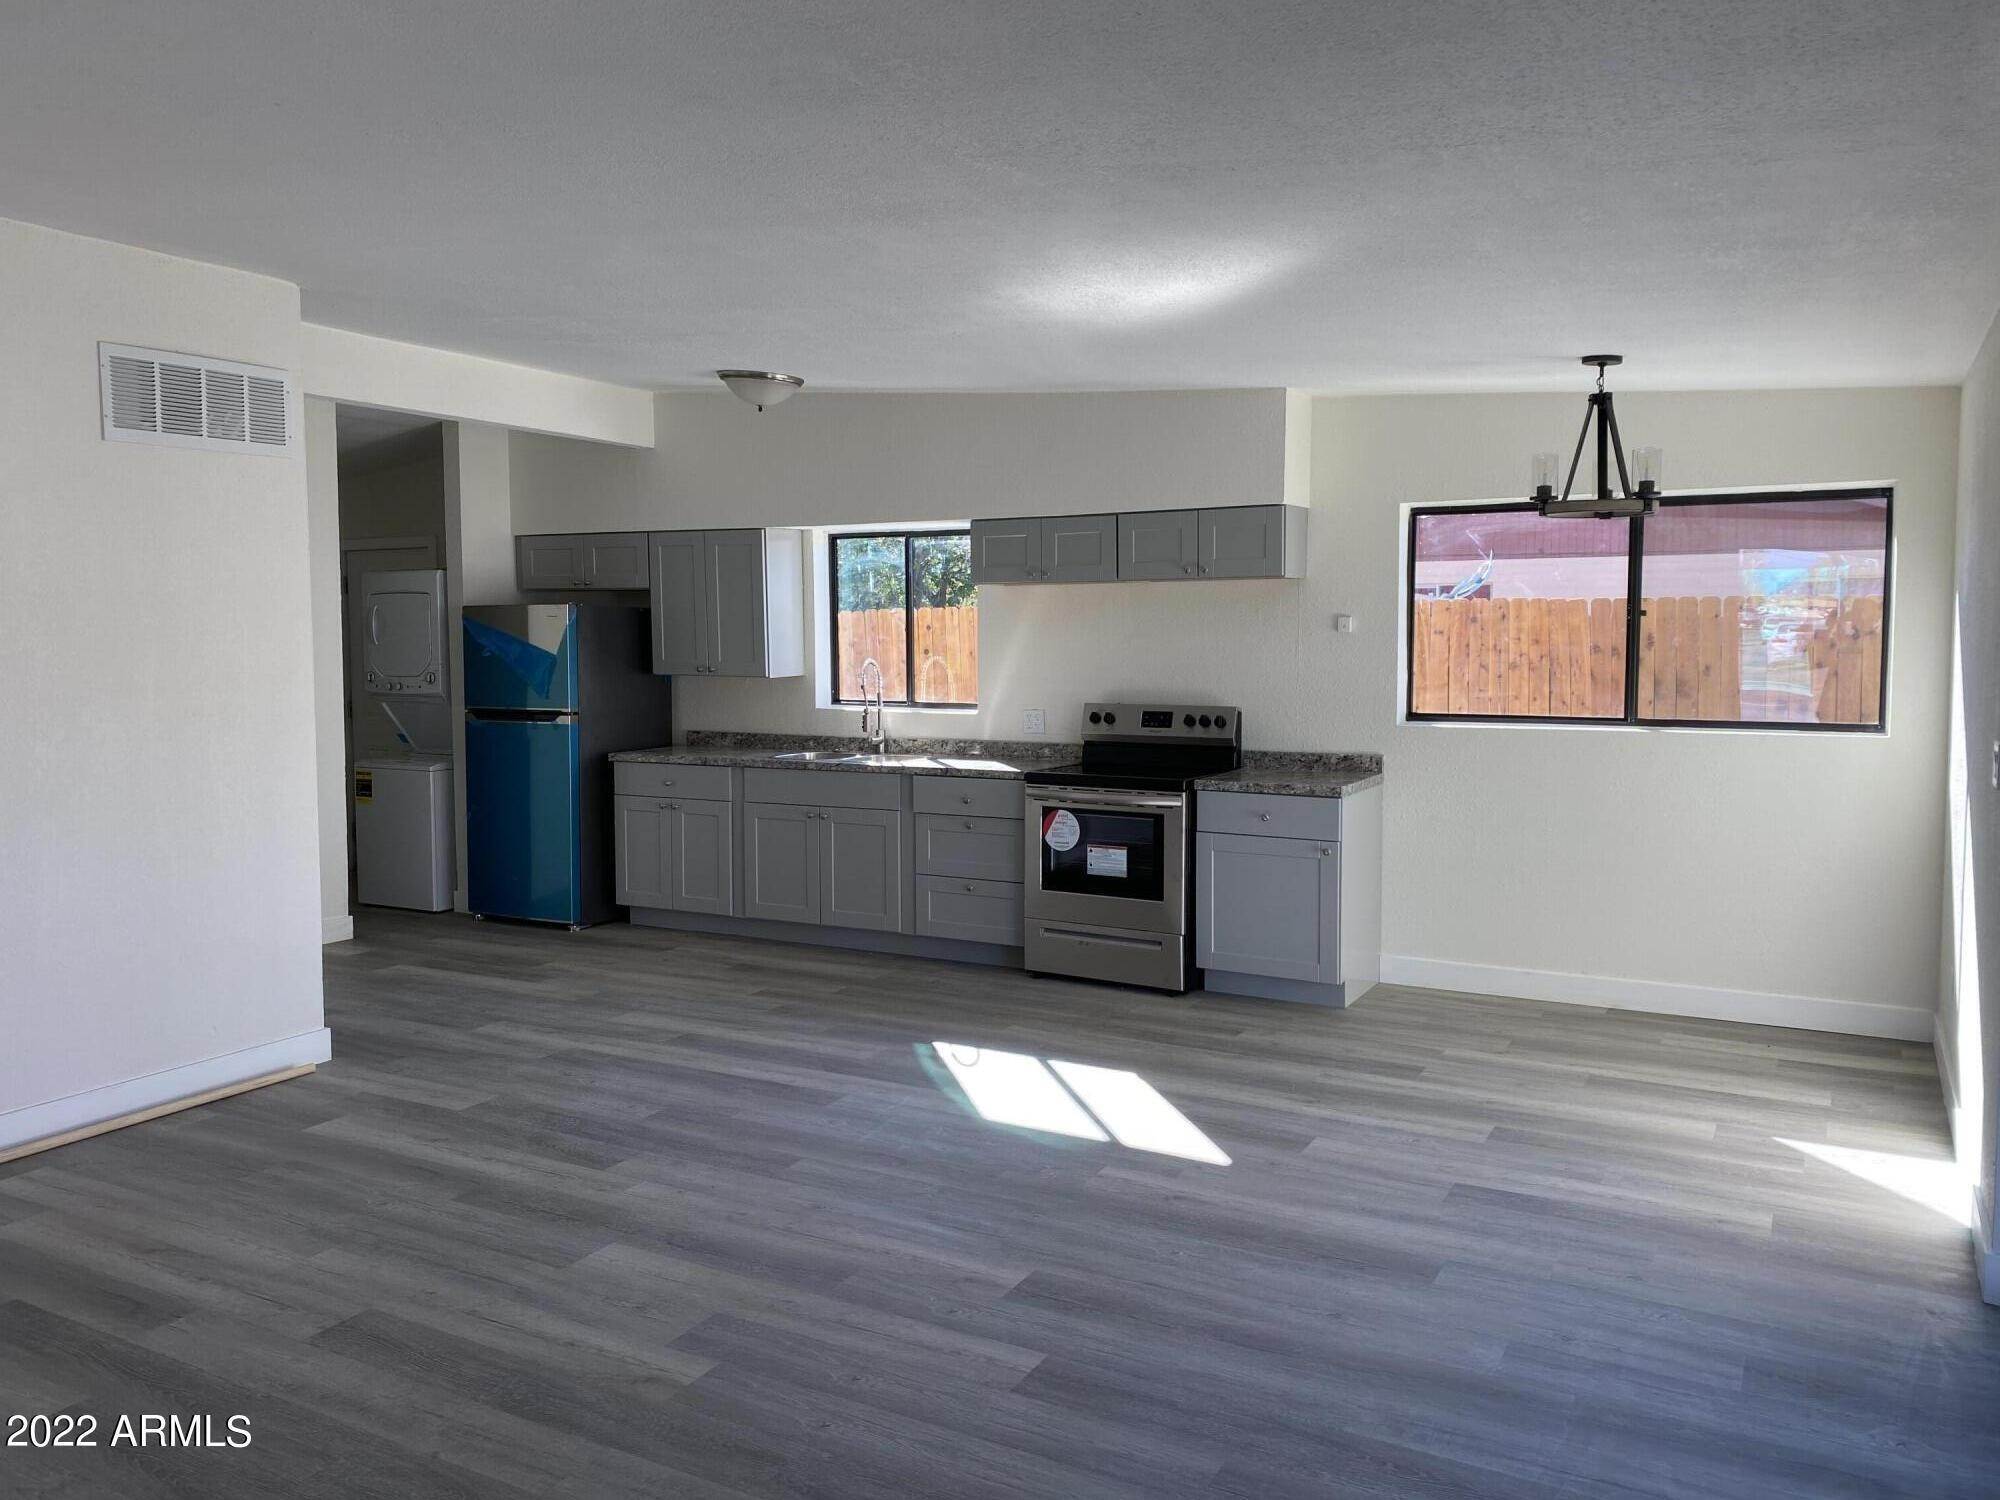 9. Duplex Homes for Sale at Mesa, AZ 85201